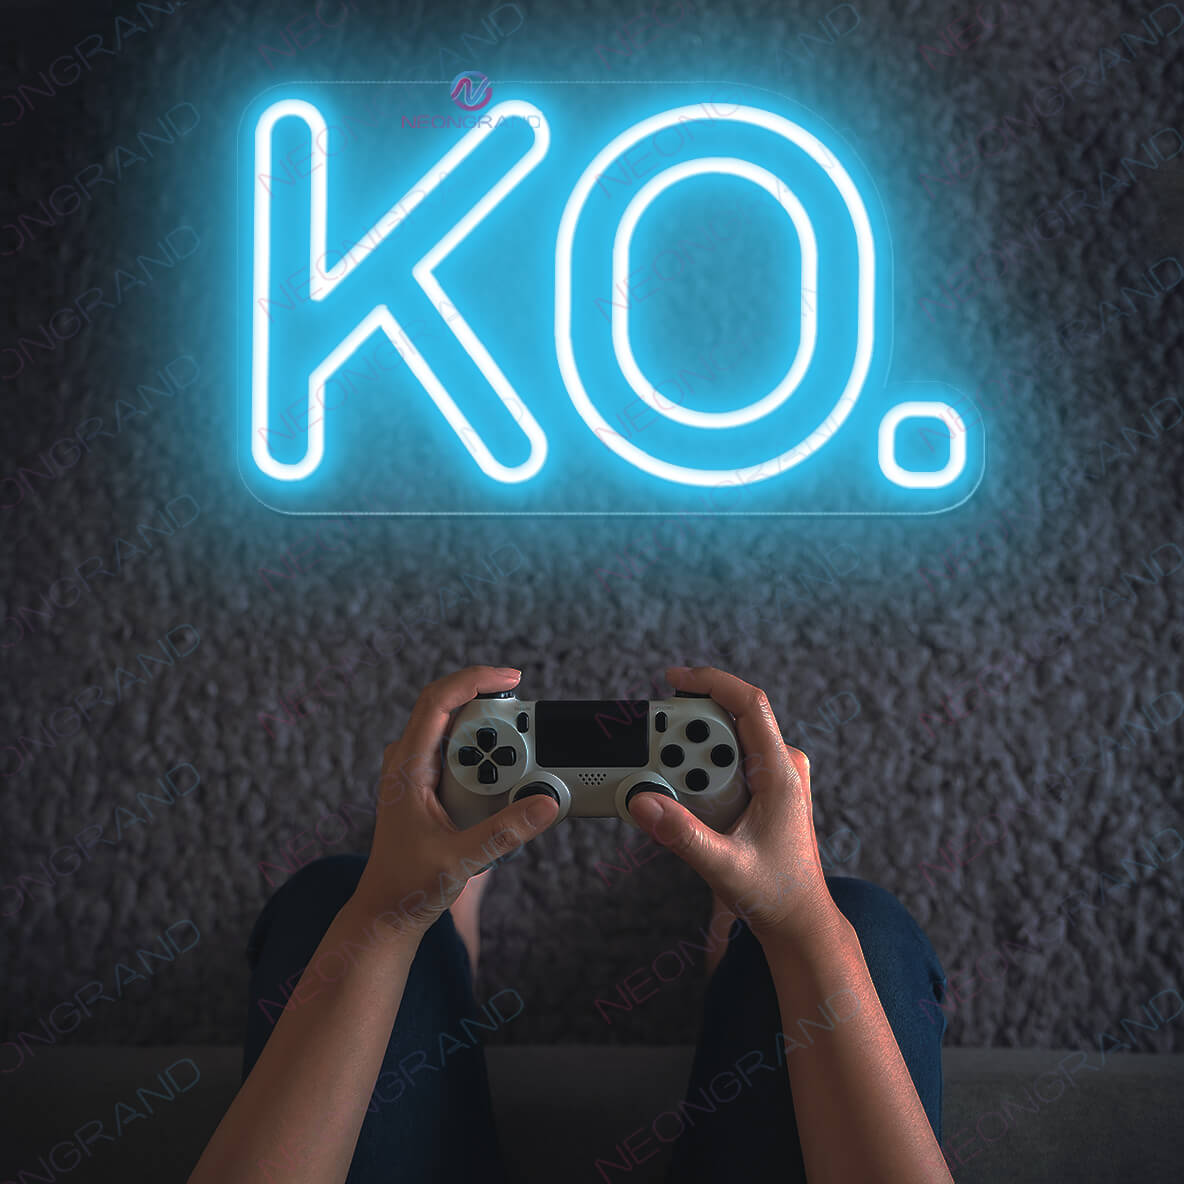 Gaming Neon Signs KO Game Led Light light blue